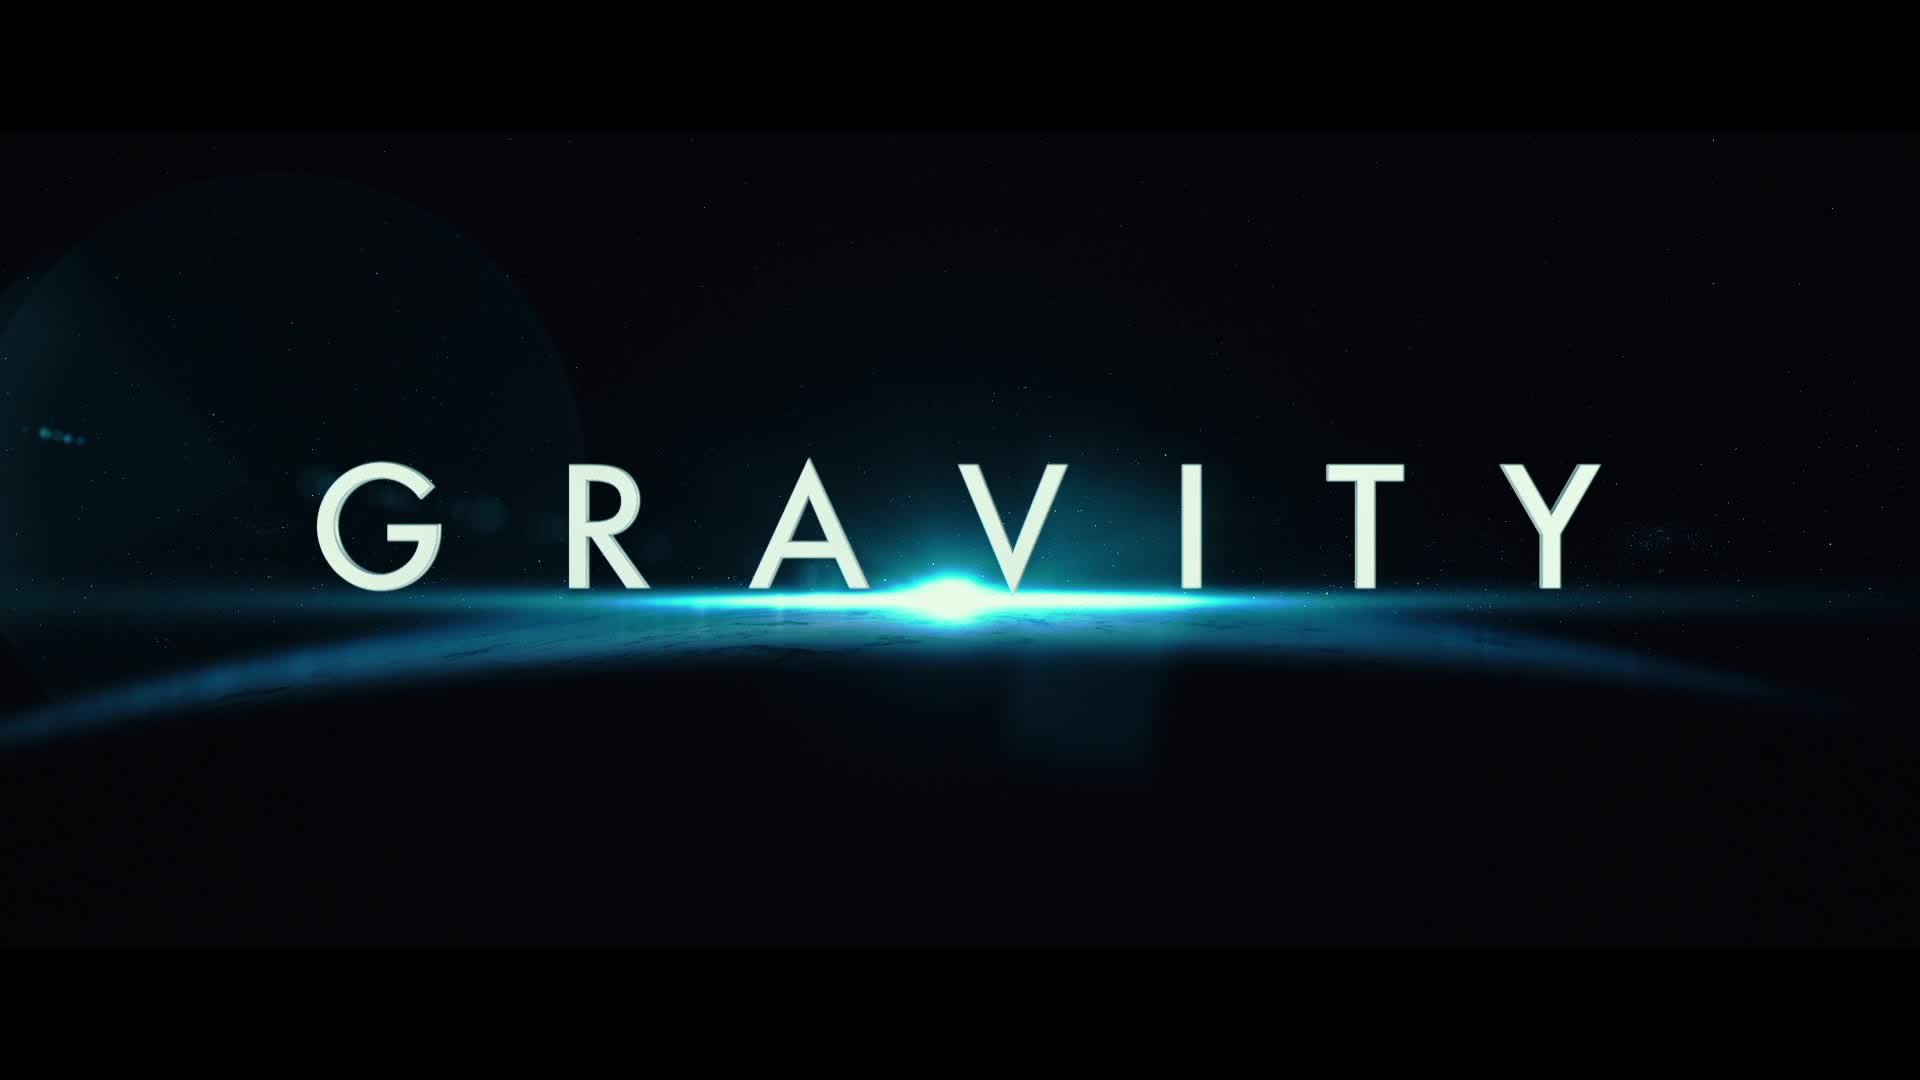 gravity, Drama, Sci fi, Thriller, Space, Astronaut, Poster, Vx Wallpaper